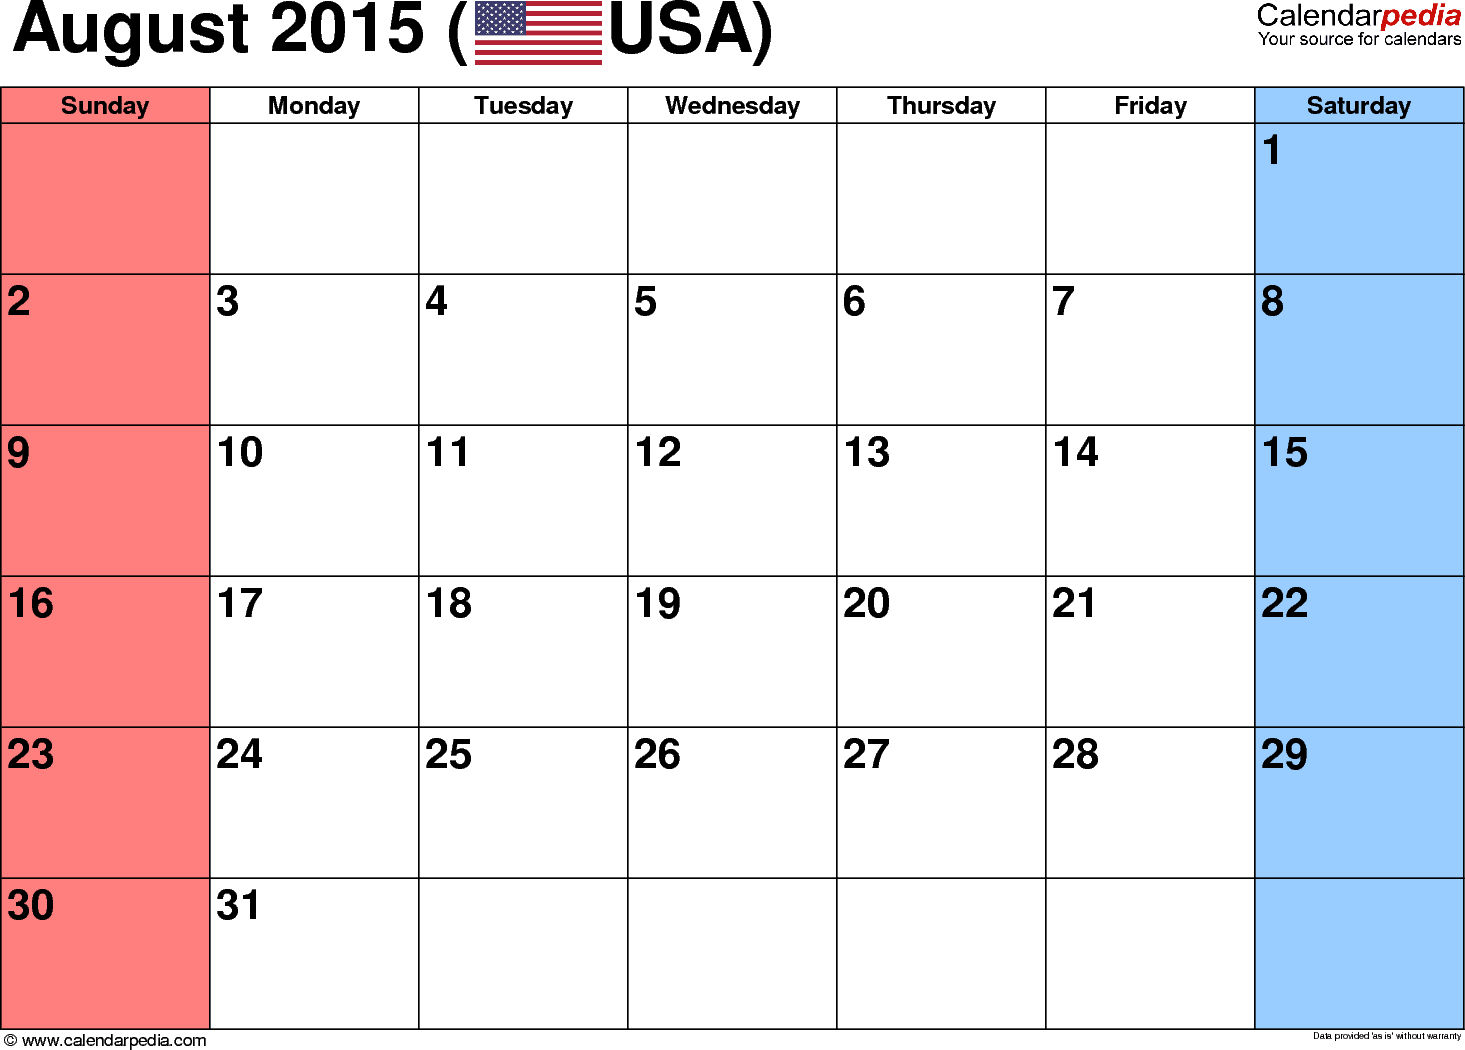 Weekly Schedule Calendar Template